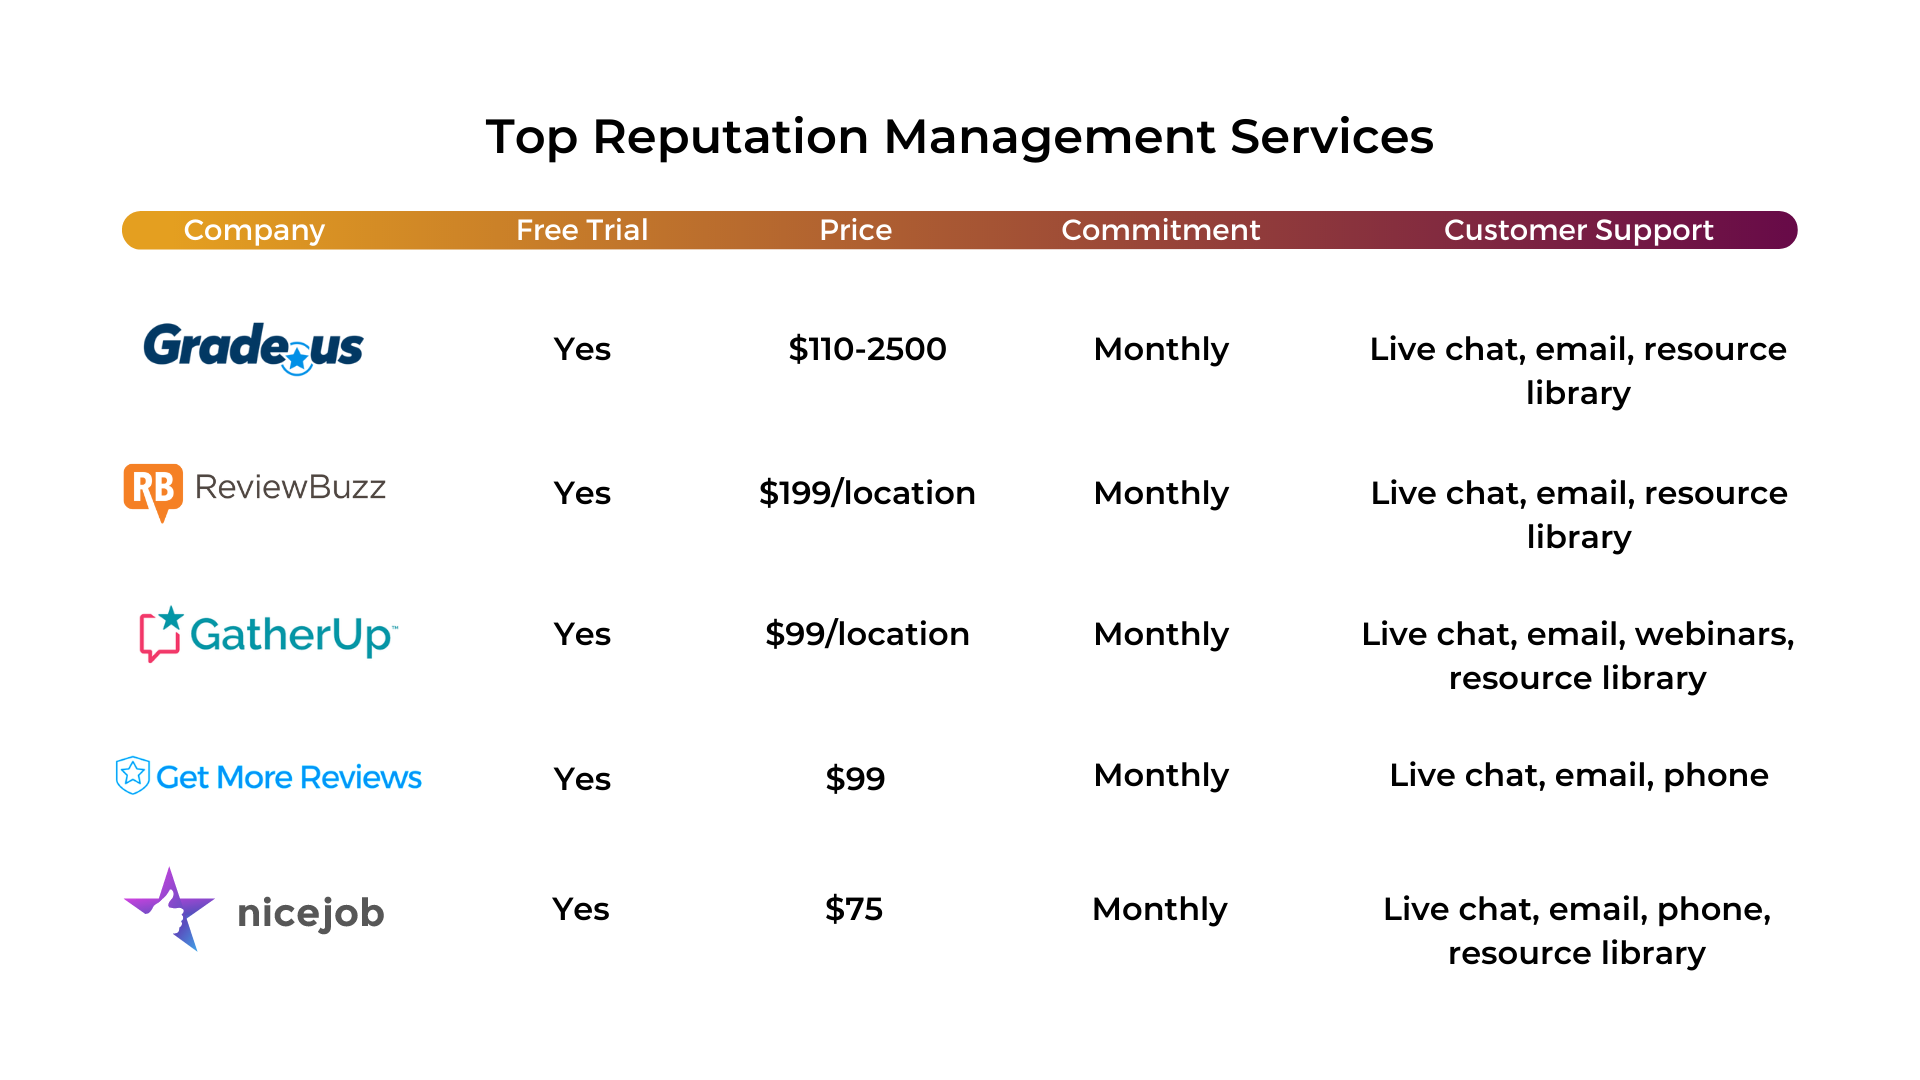 Top Reputation Management Services